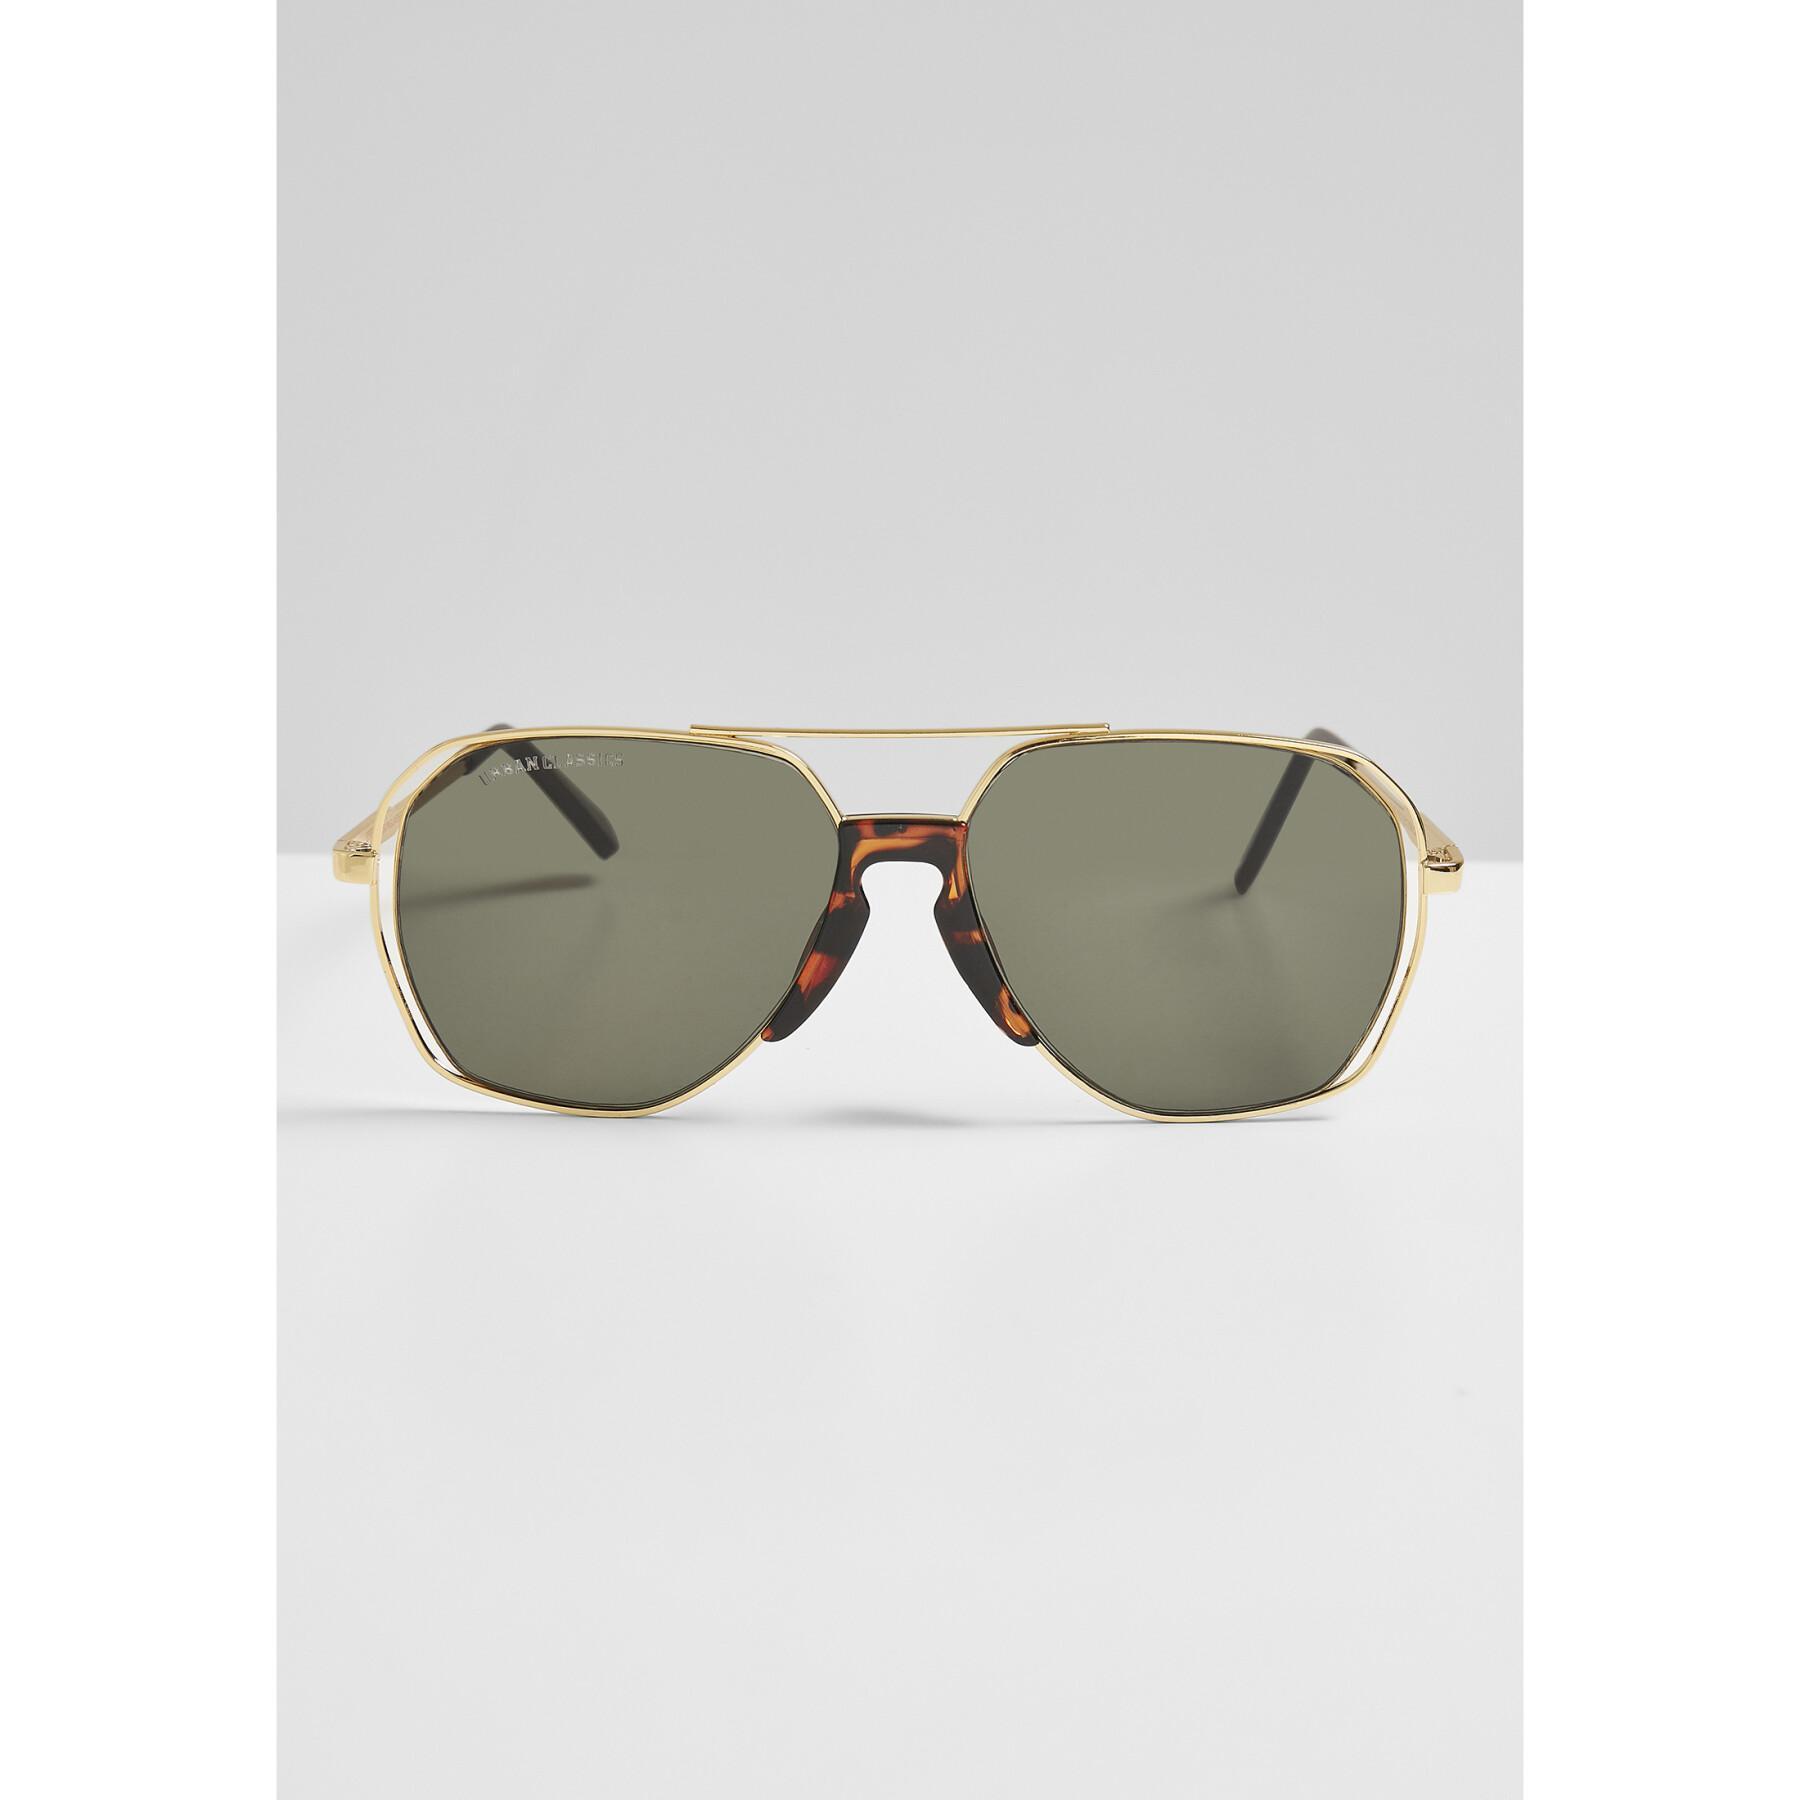 Sunglasses with Sunglasses Fashion Classics Urban Accessories - Accessories - karphatos chain 